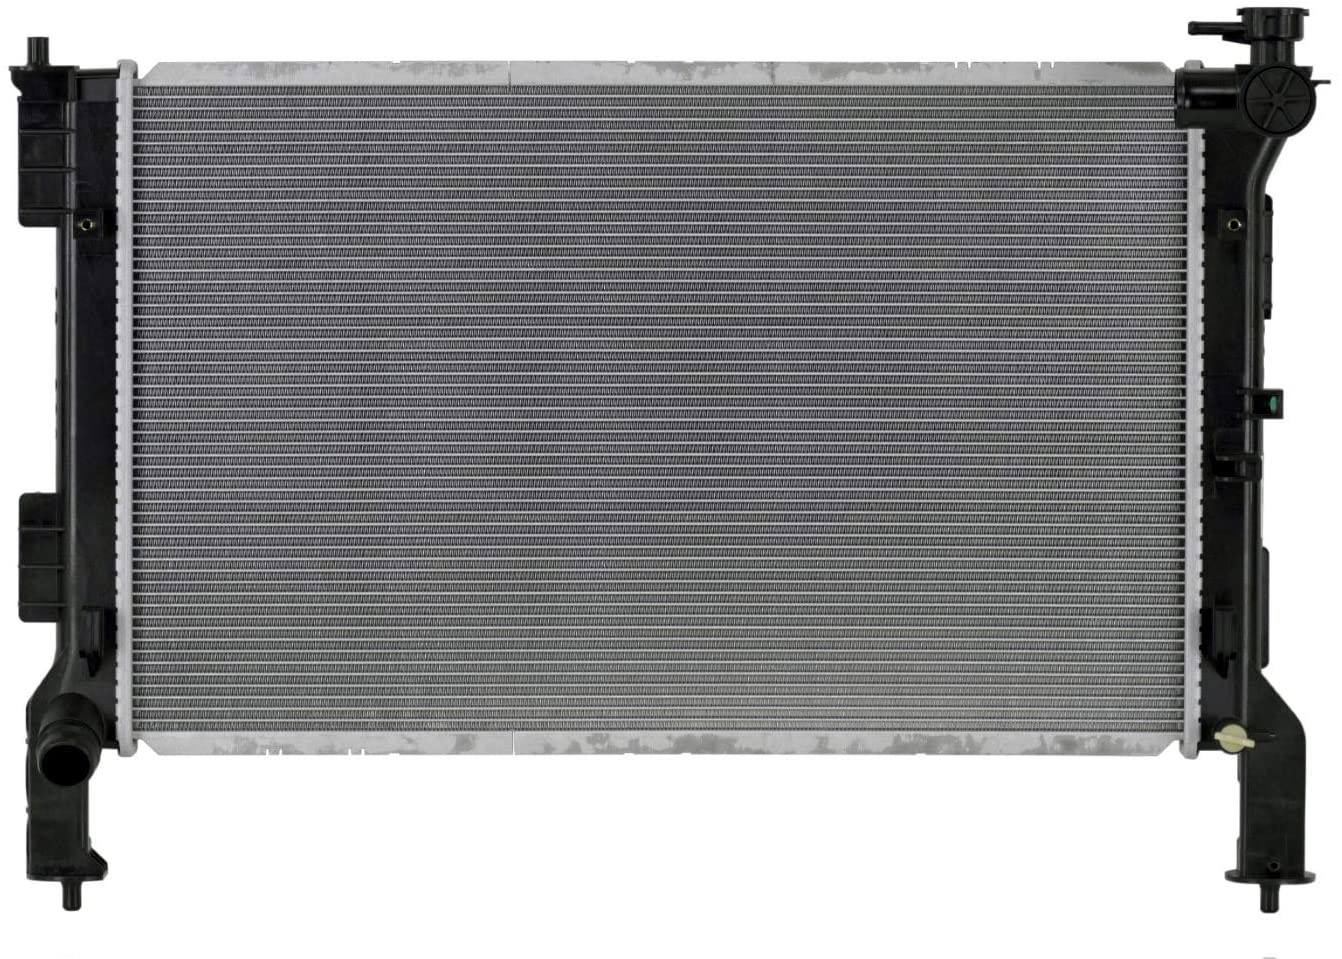 Radiator apa Hyundai Sonata (Lf), 2014- Motor 2.0; 2.0 H, Cv Automata, Aluminiu/Plastic Brazat, 635x402x16, Koyo, OE: 25310e6100,